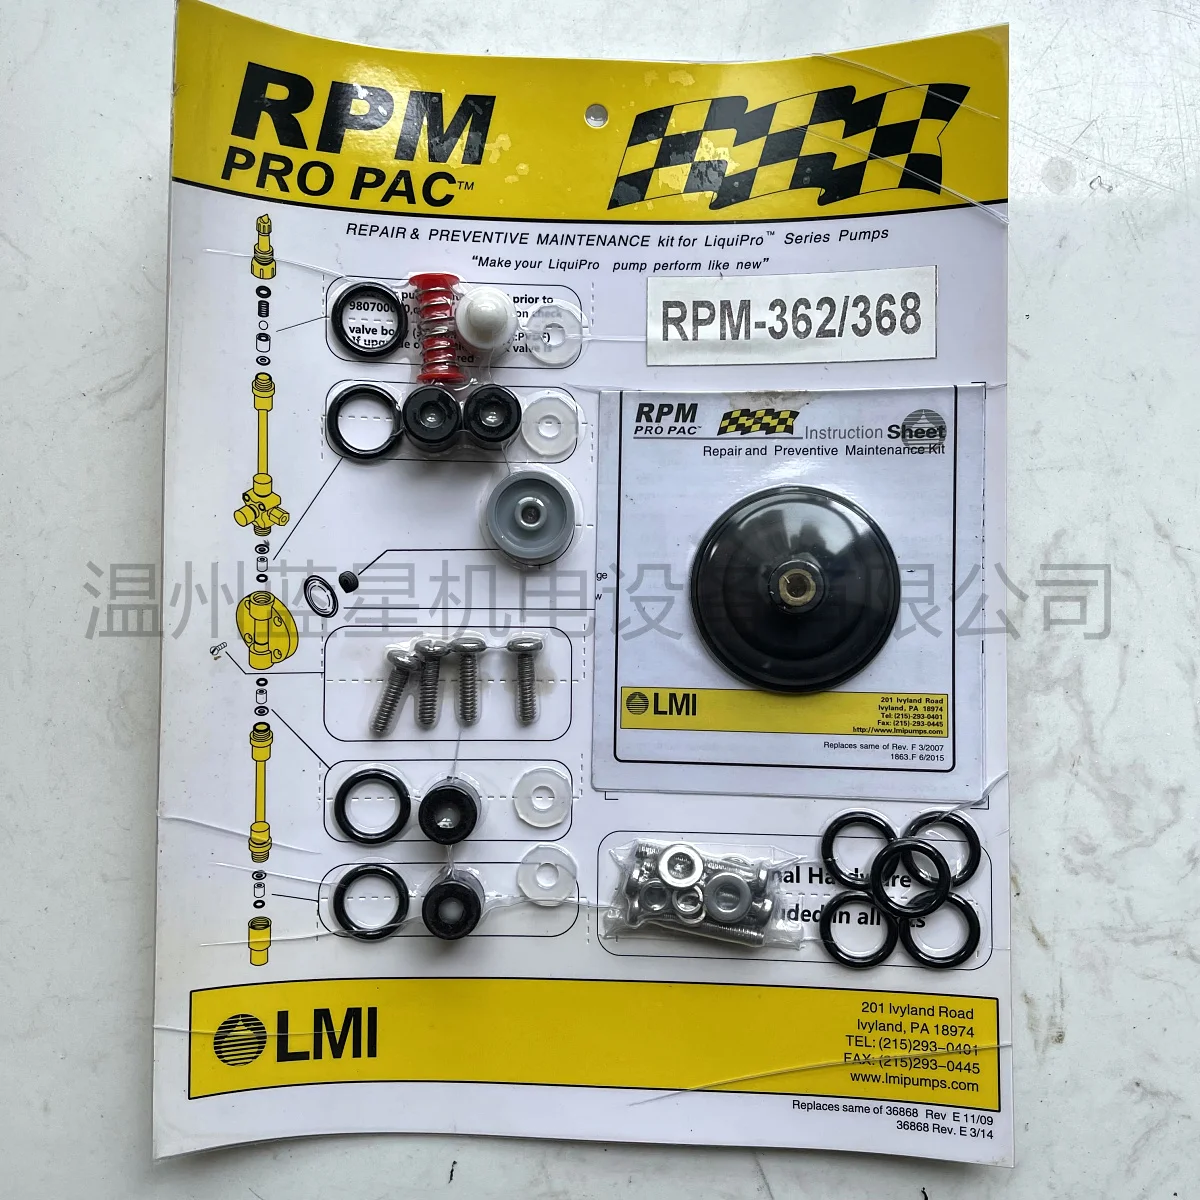 

New Original LMI Milton Roe Pump Valve RPM-362/368 Solenoid Pump P126-398 Diaphragm Dosing Pump Repair